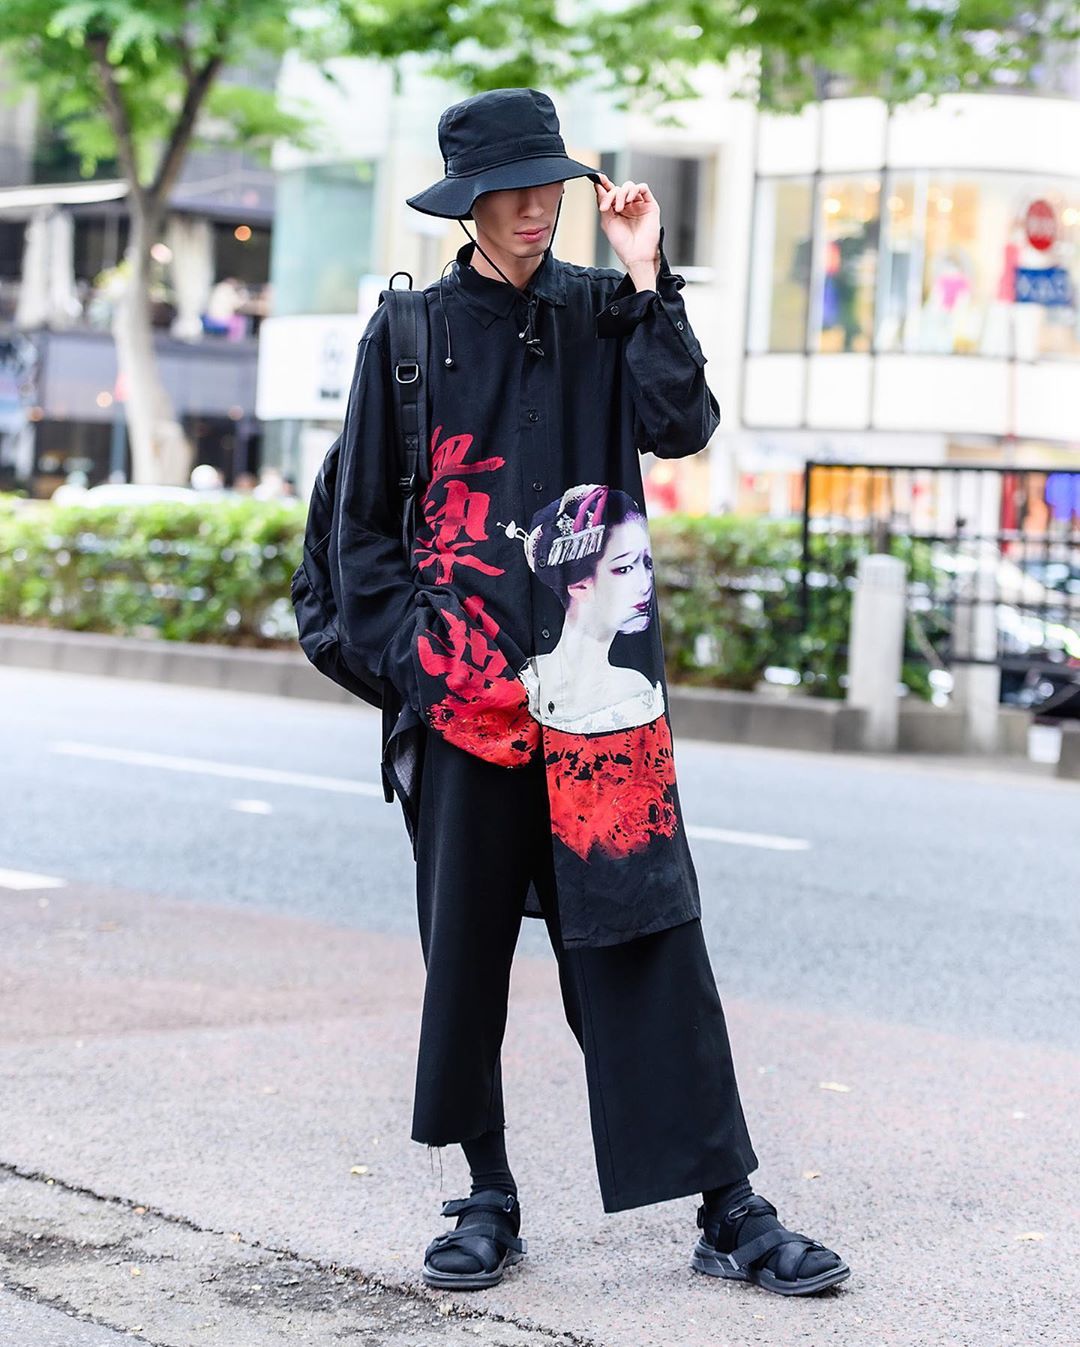 Tokyo Fashion: Self-employed Kei (@actsunburst) on the street in ...